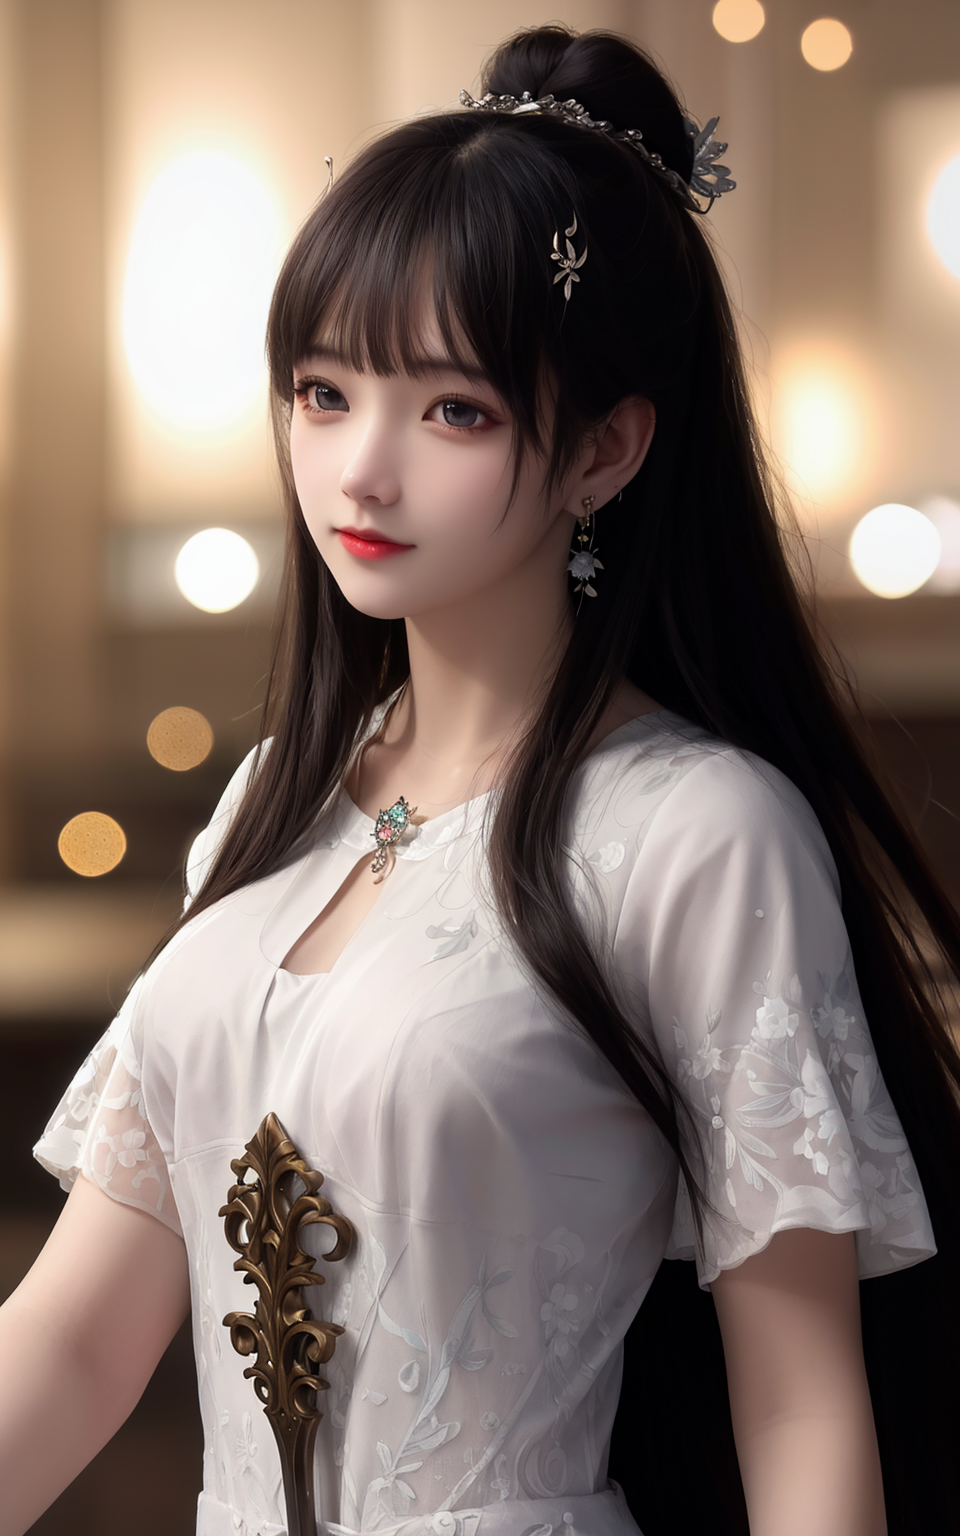 General 960x1536 AI art boobs white skirt white dress chinese dress Asian women long hair portrait display earring blurred blurry background looking away digital art